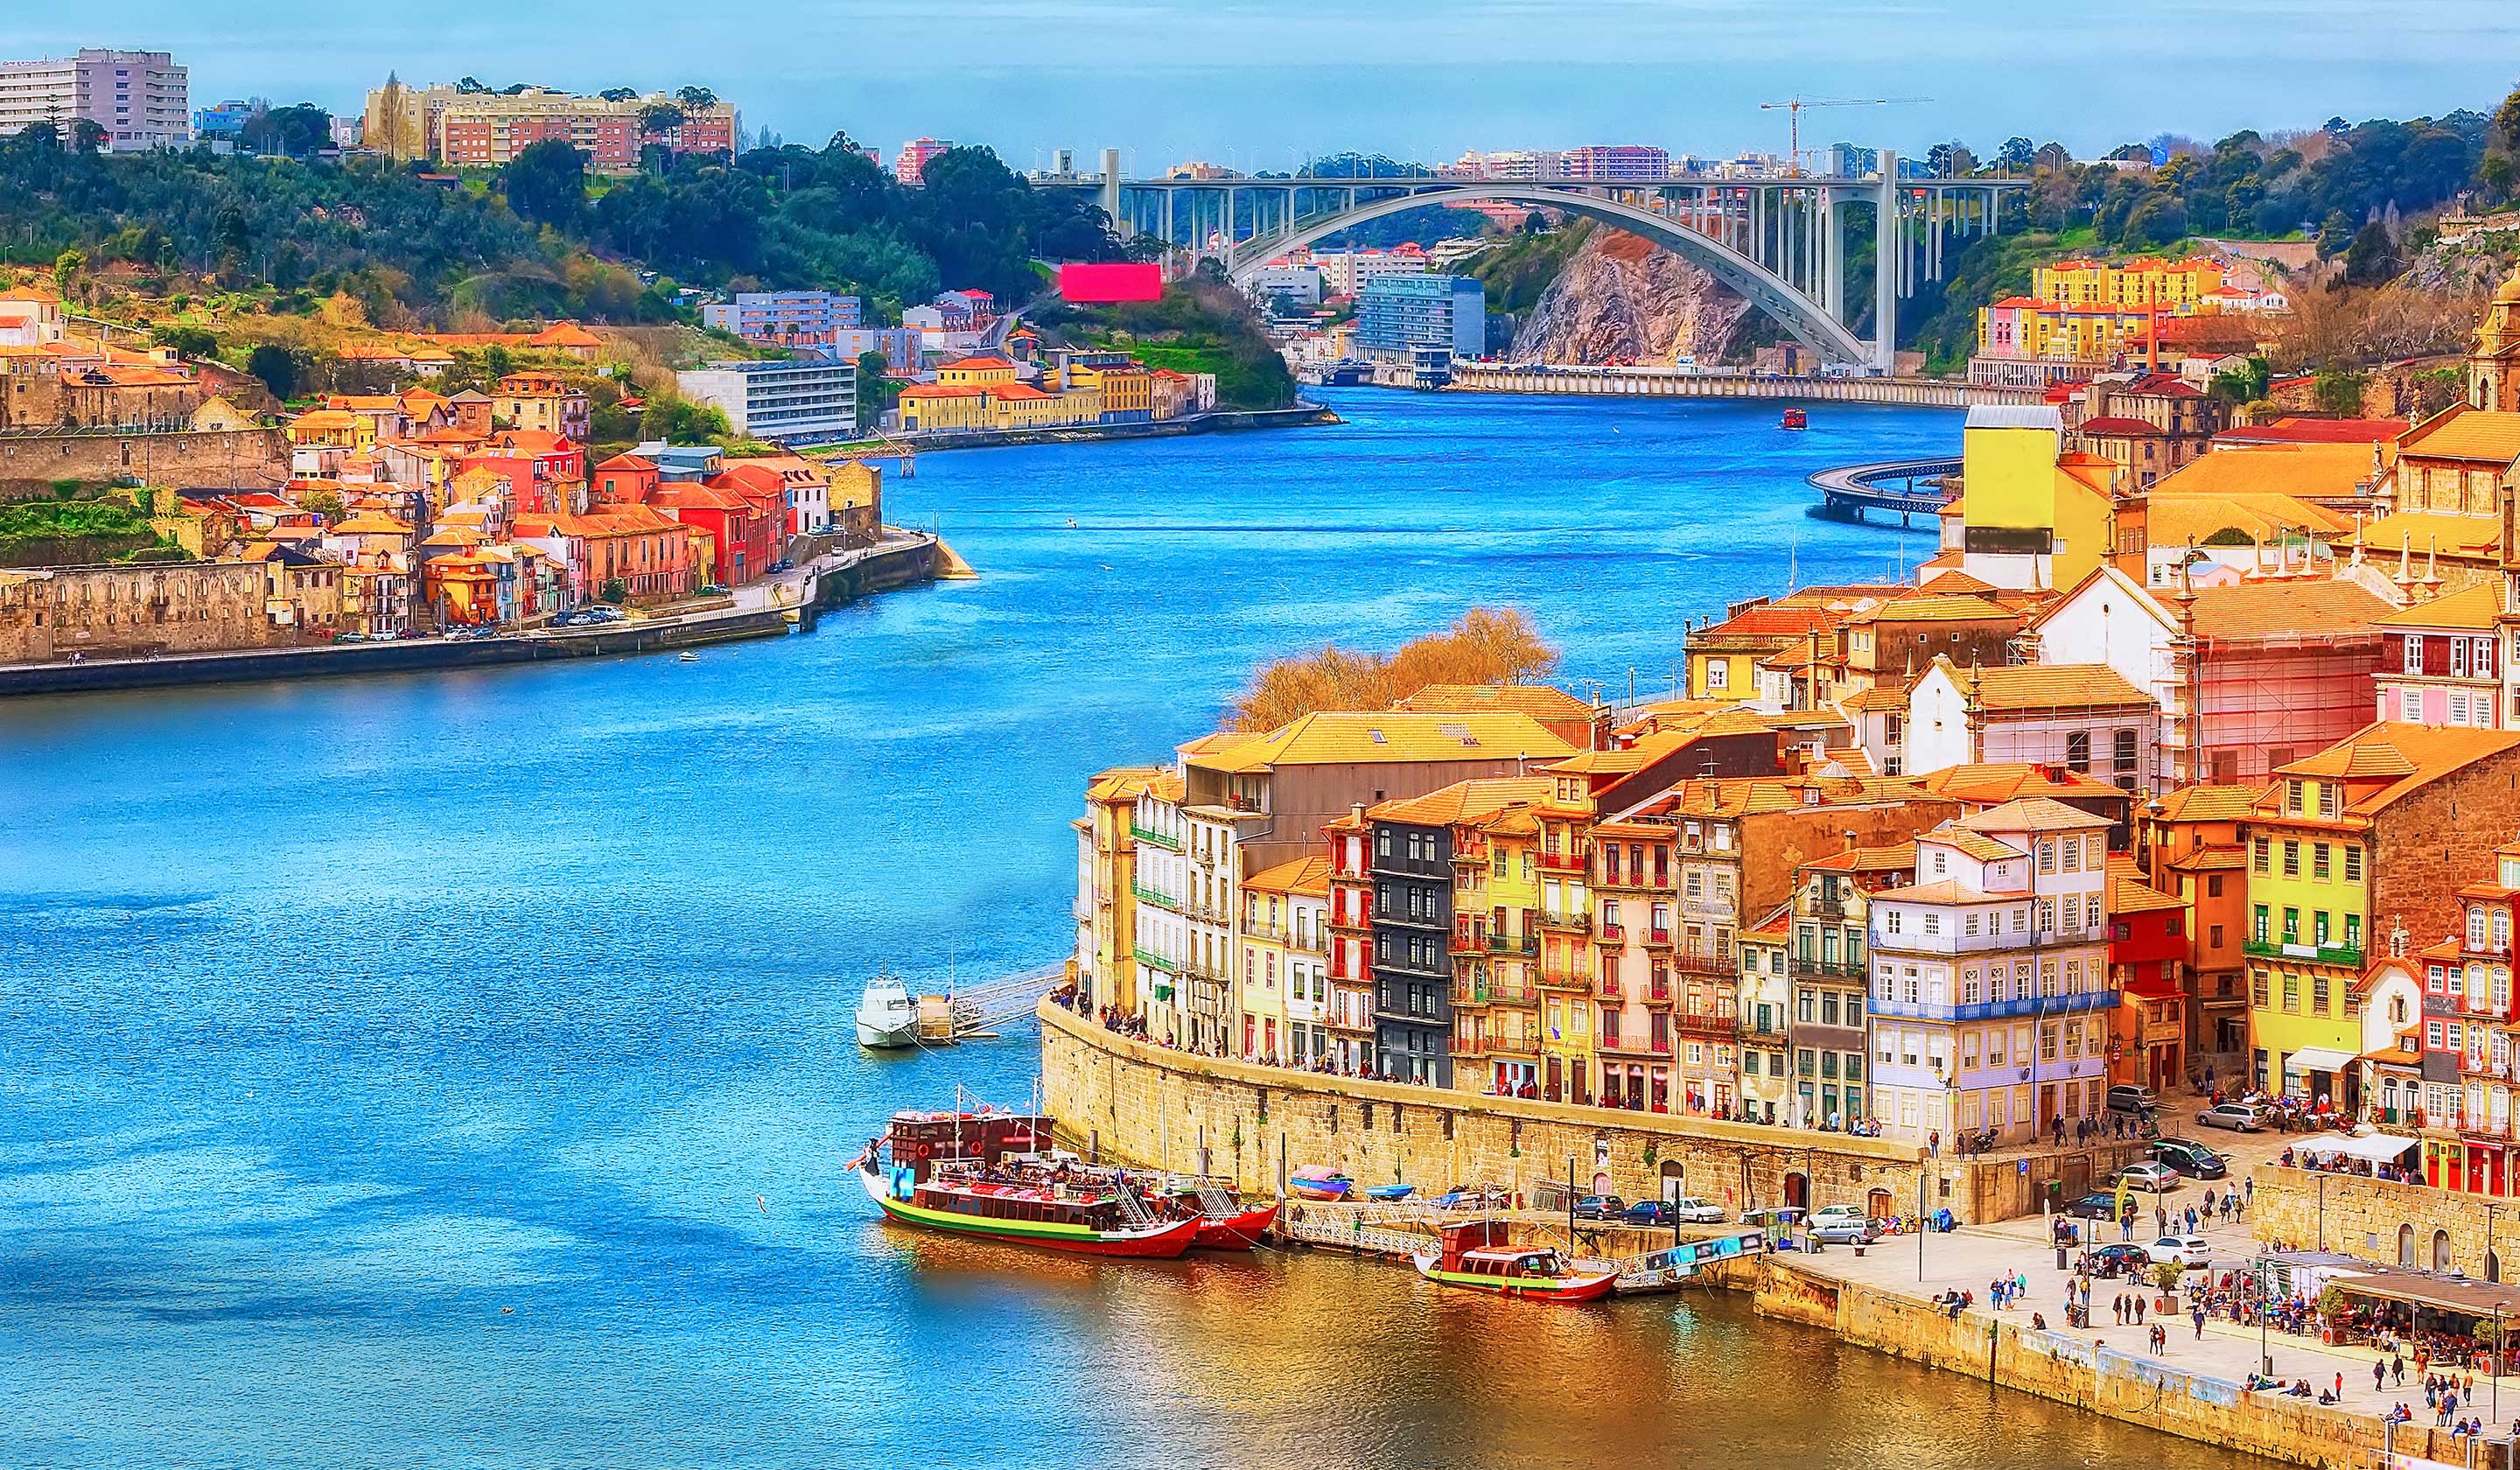 douro river cruise 2 days